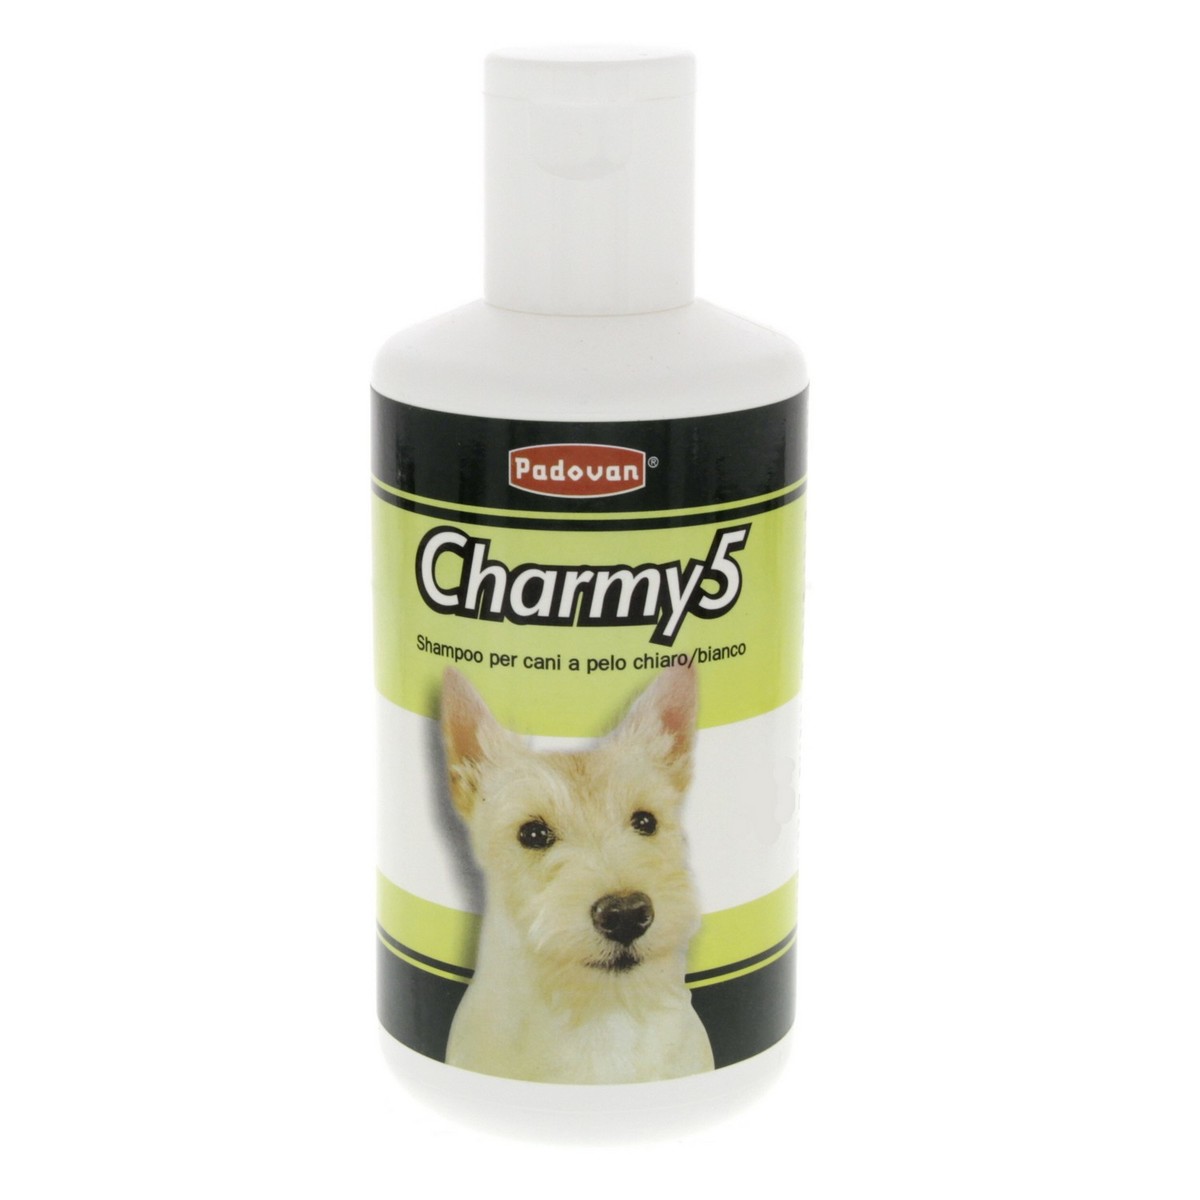 Padovan Charmy 5 Shampoo Haired Breeds Dog 250ml